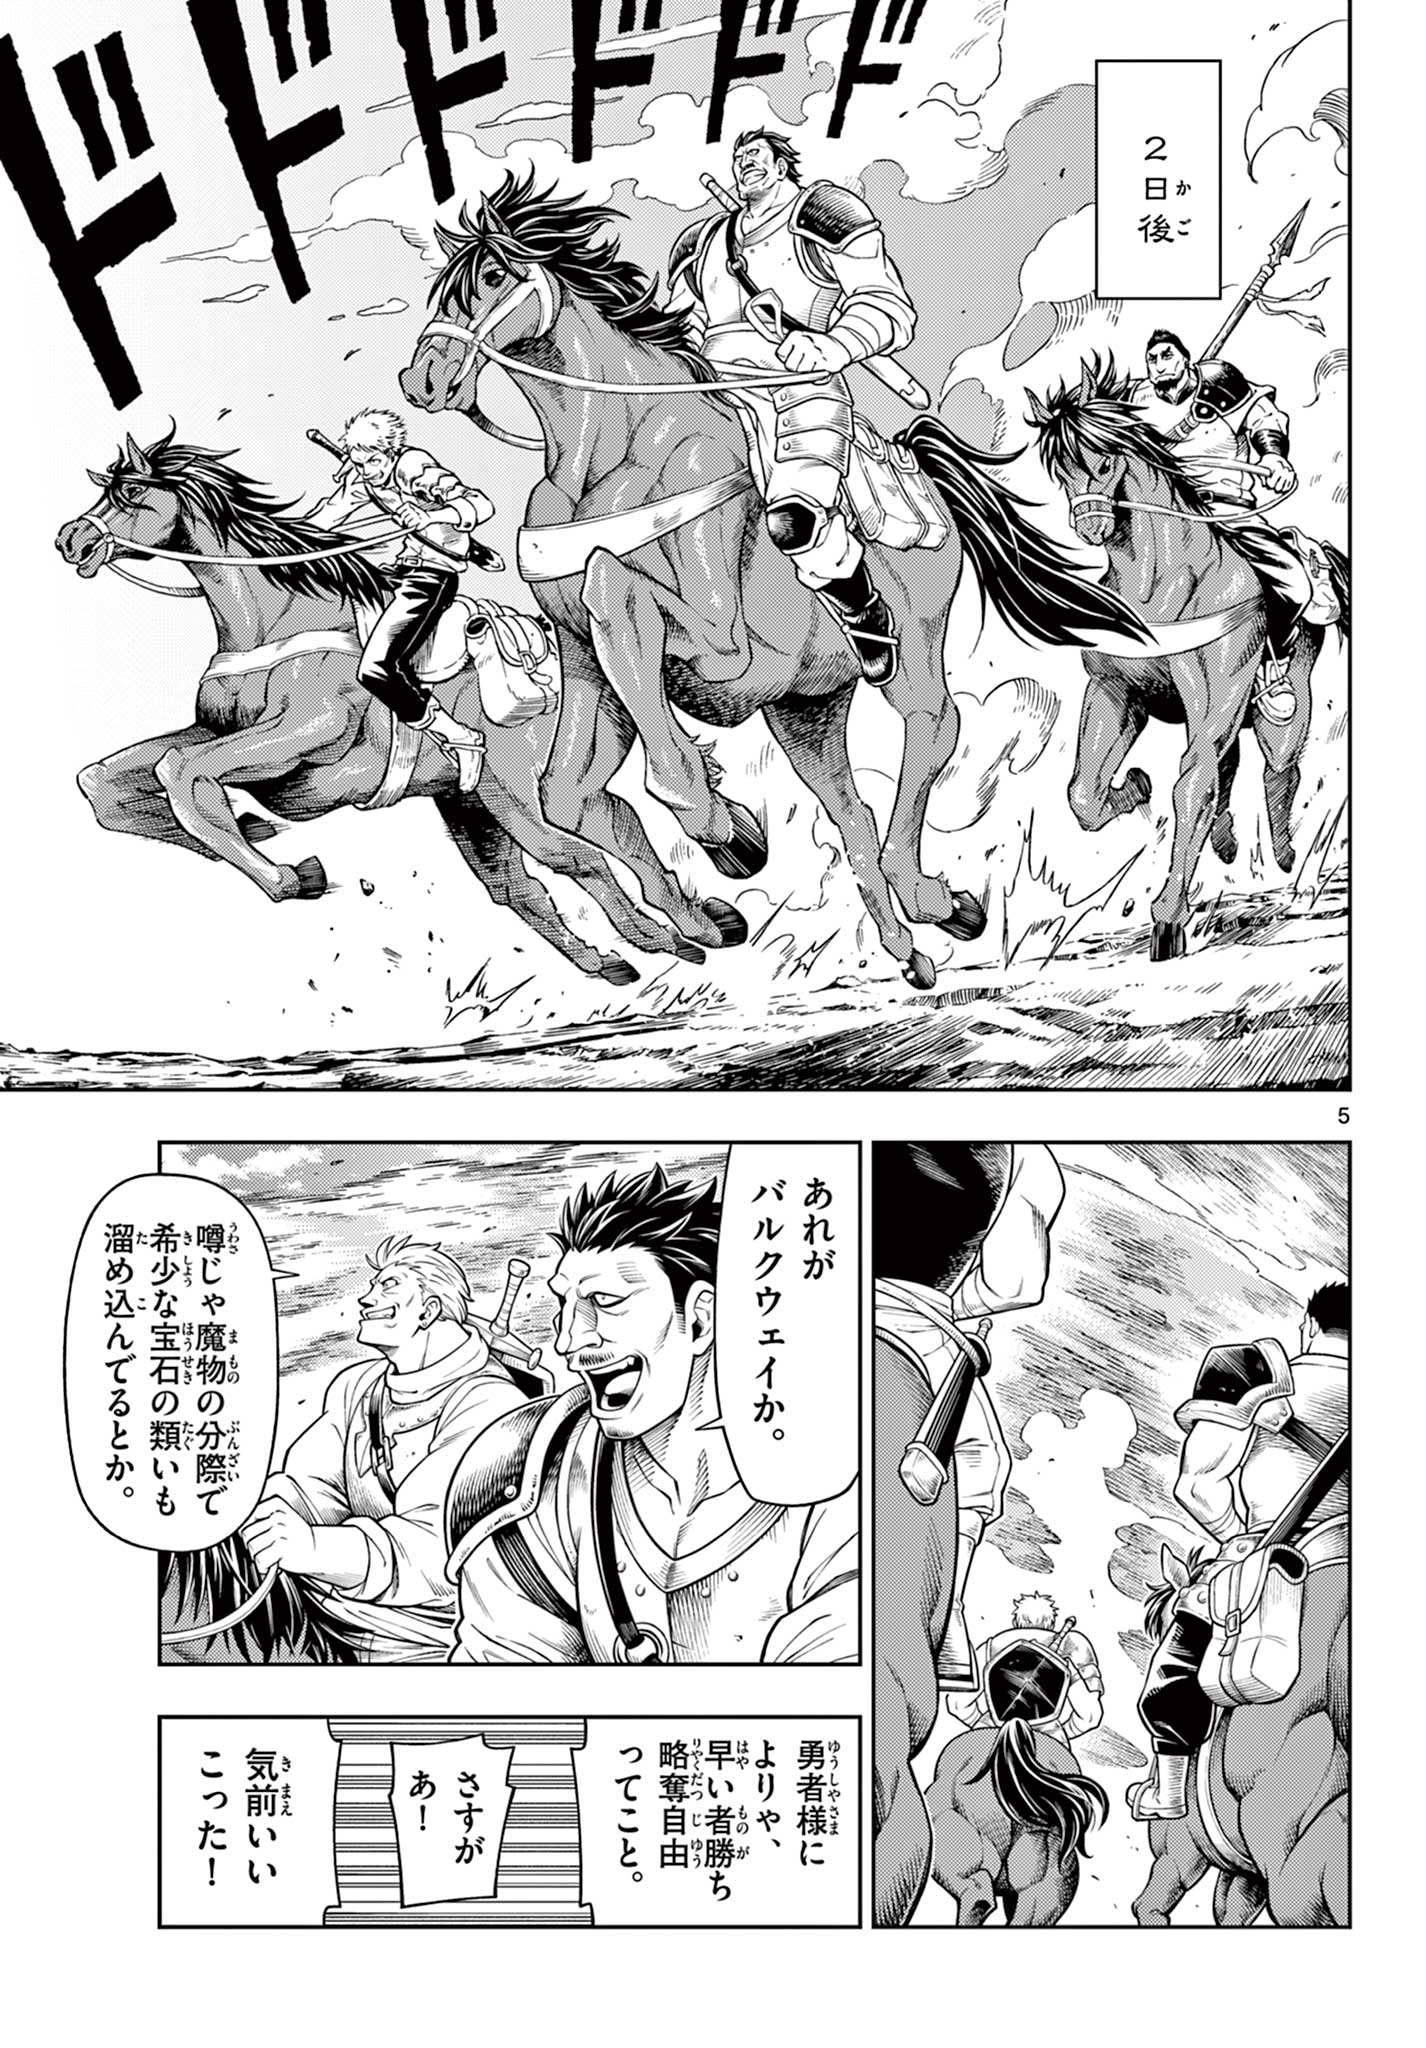 Soara to Mamono no ie - Chapter 27 - Page 5